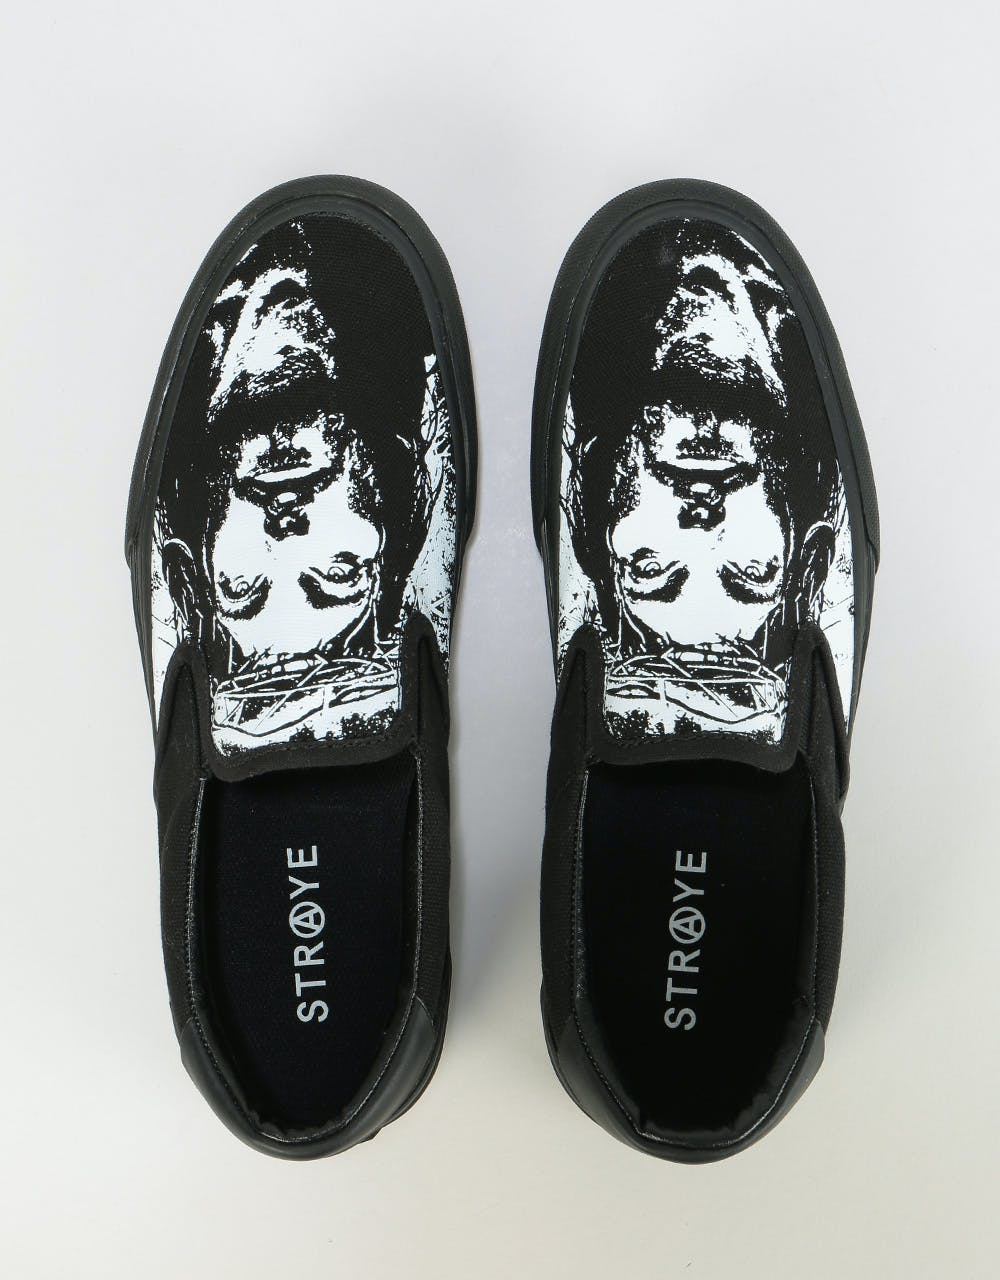 Straye Ventura Slip-On Canvas Skate Shoes - Jesus/Black